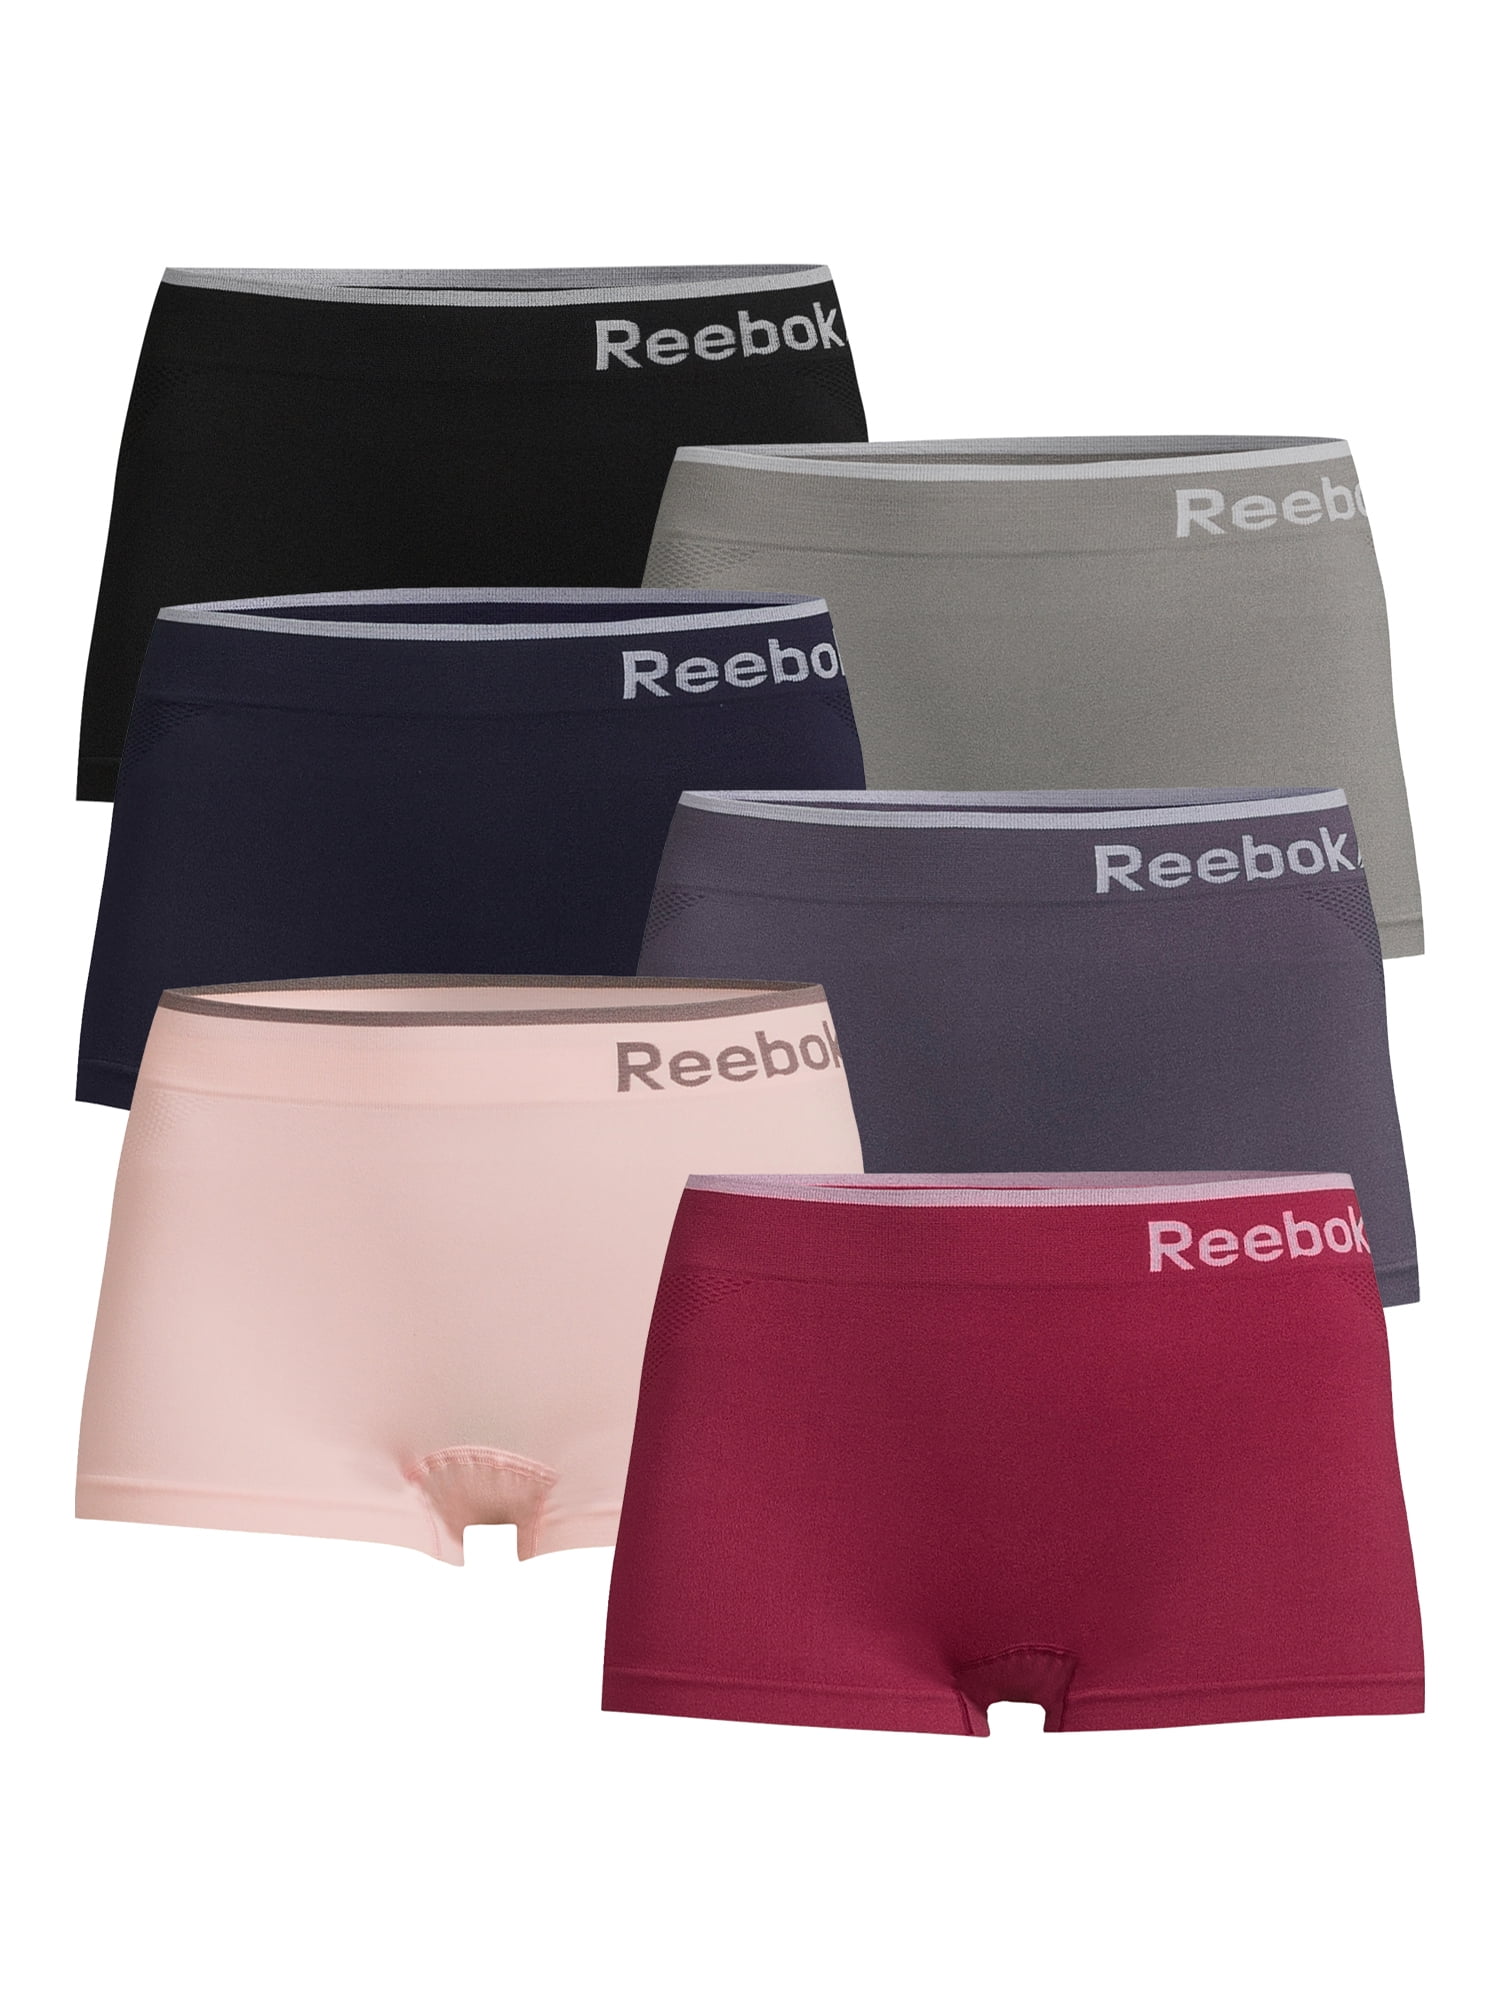 Reebok Women's Seamless Boyshort, 6-Pack, Sizes XS-3XL